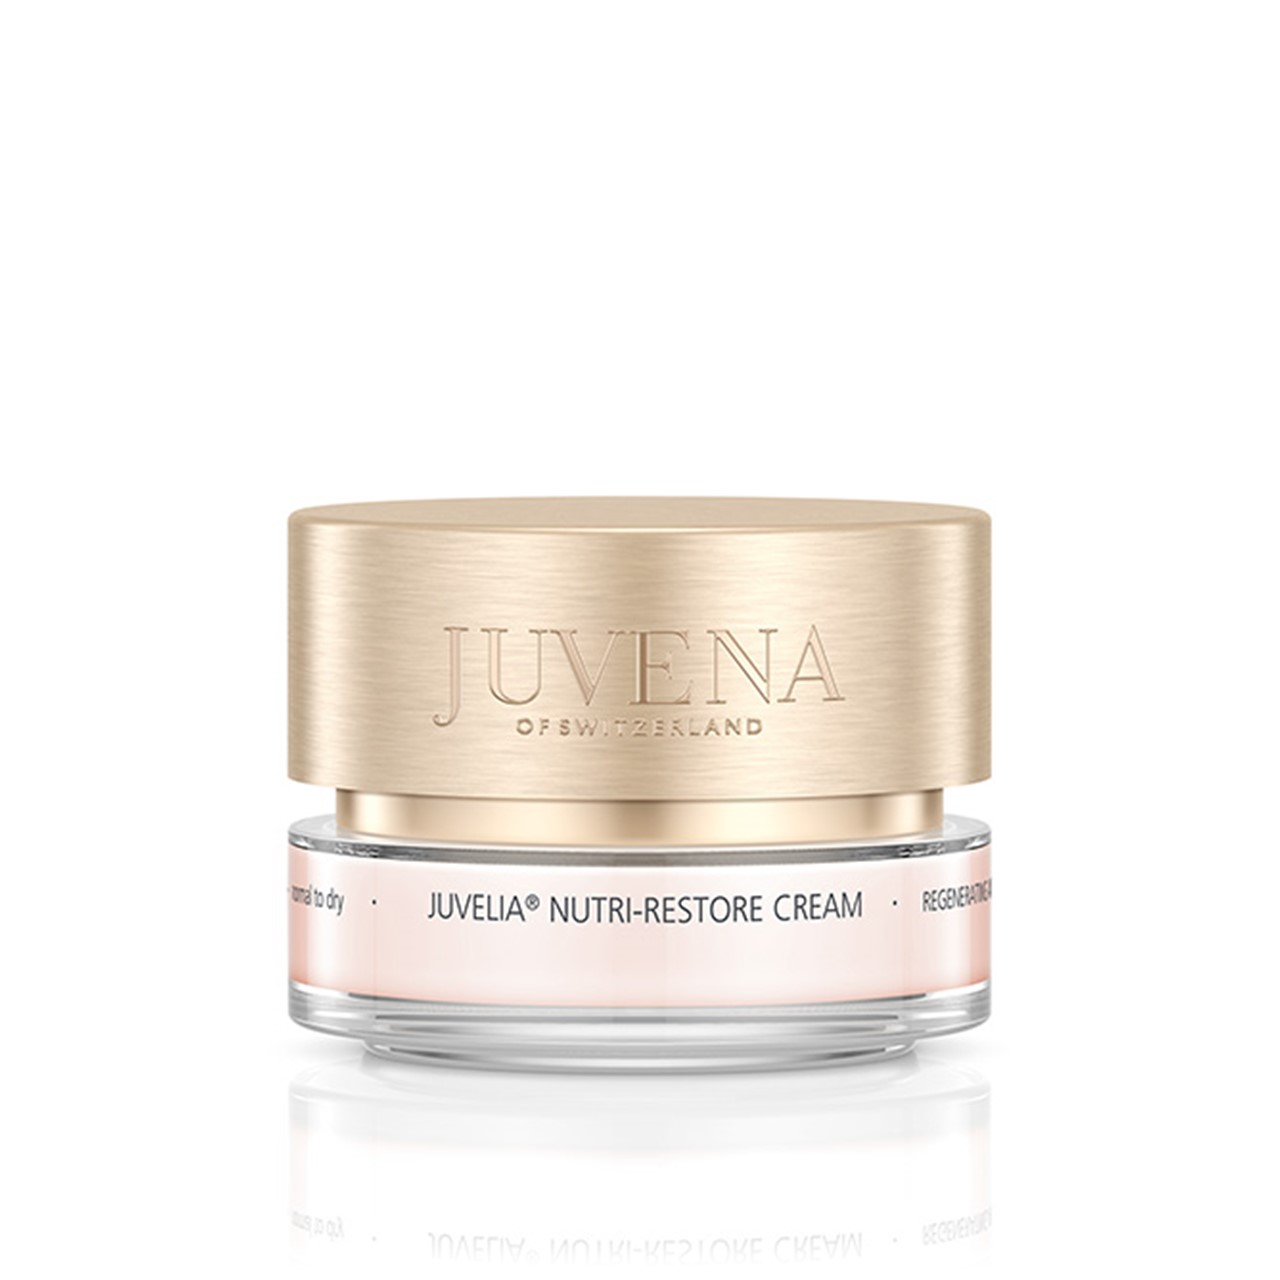 Juvena Juvelia Nutri-Restore Cream 50ml (1.7 oz)